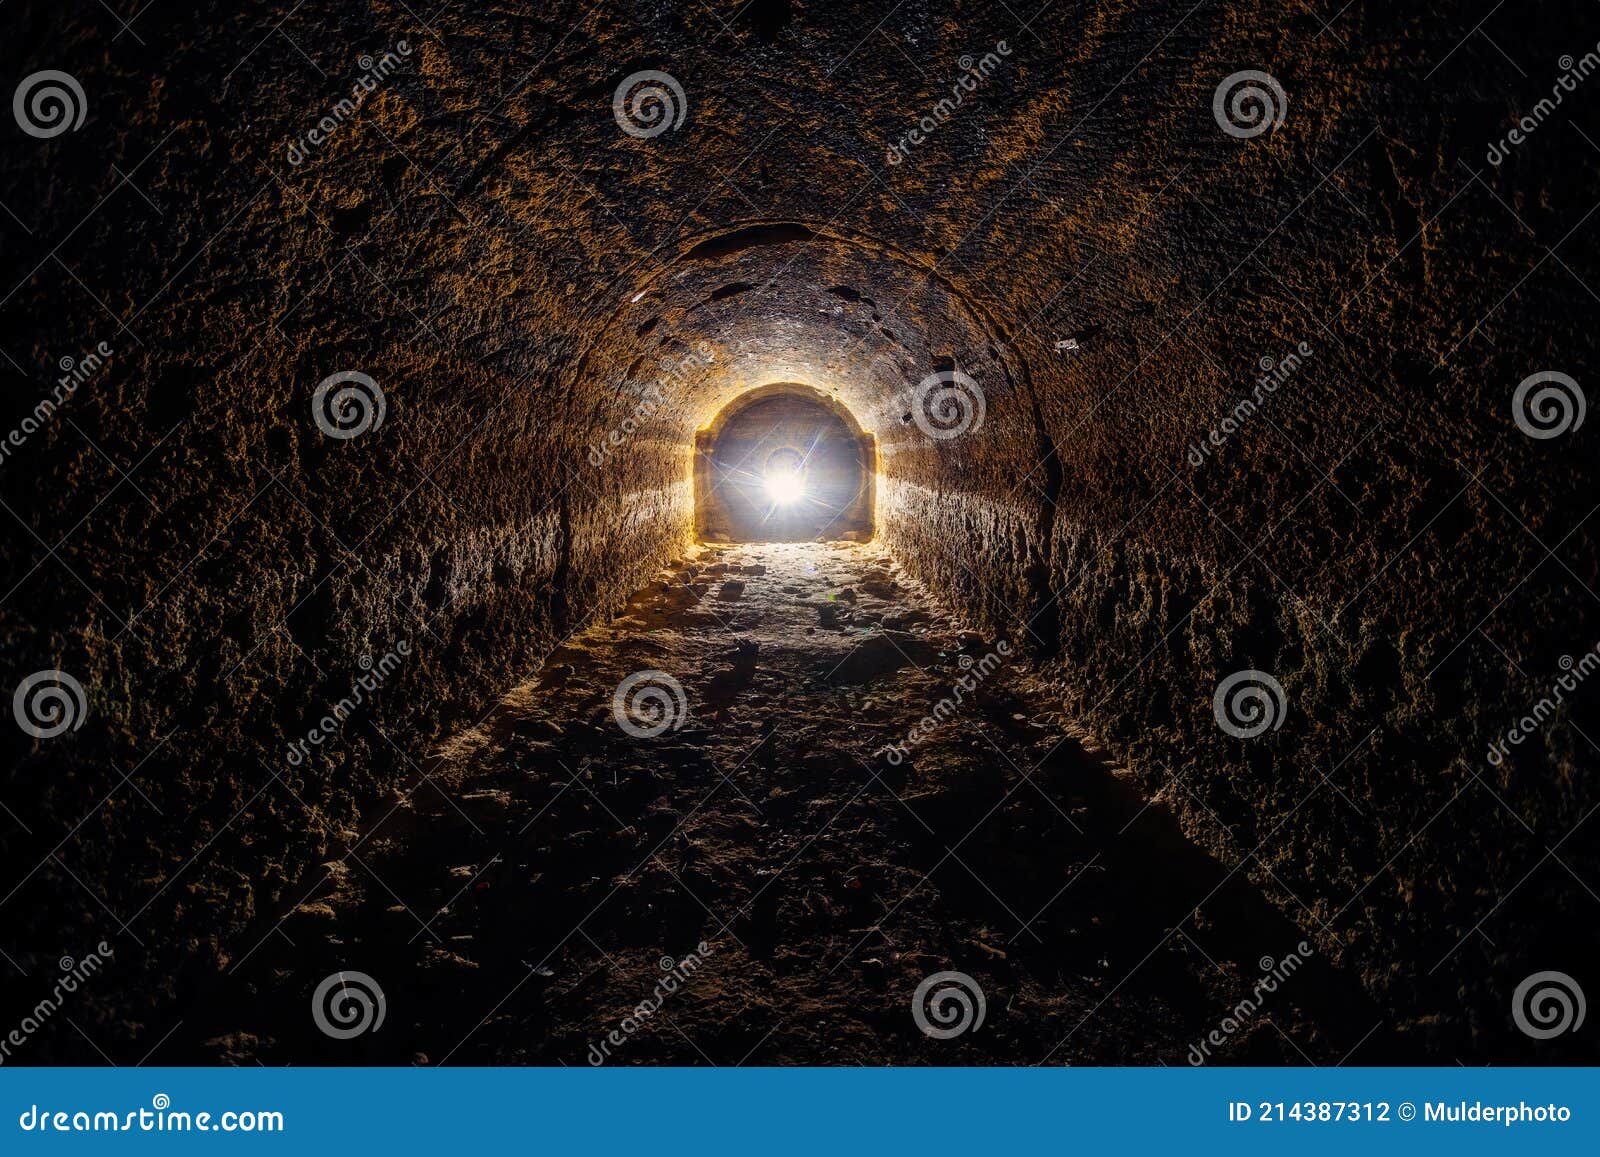 abandoned prospecting adit. tunnel at limestone at abandoned mine